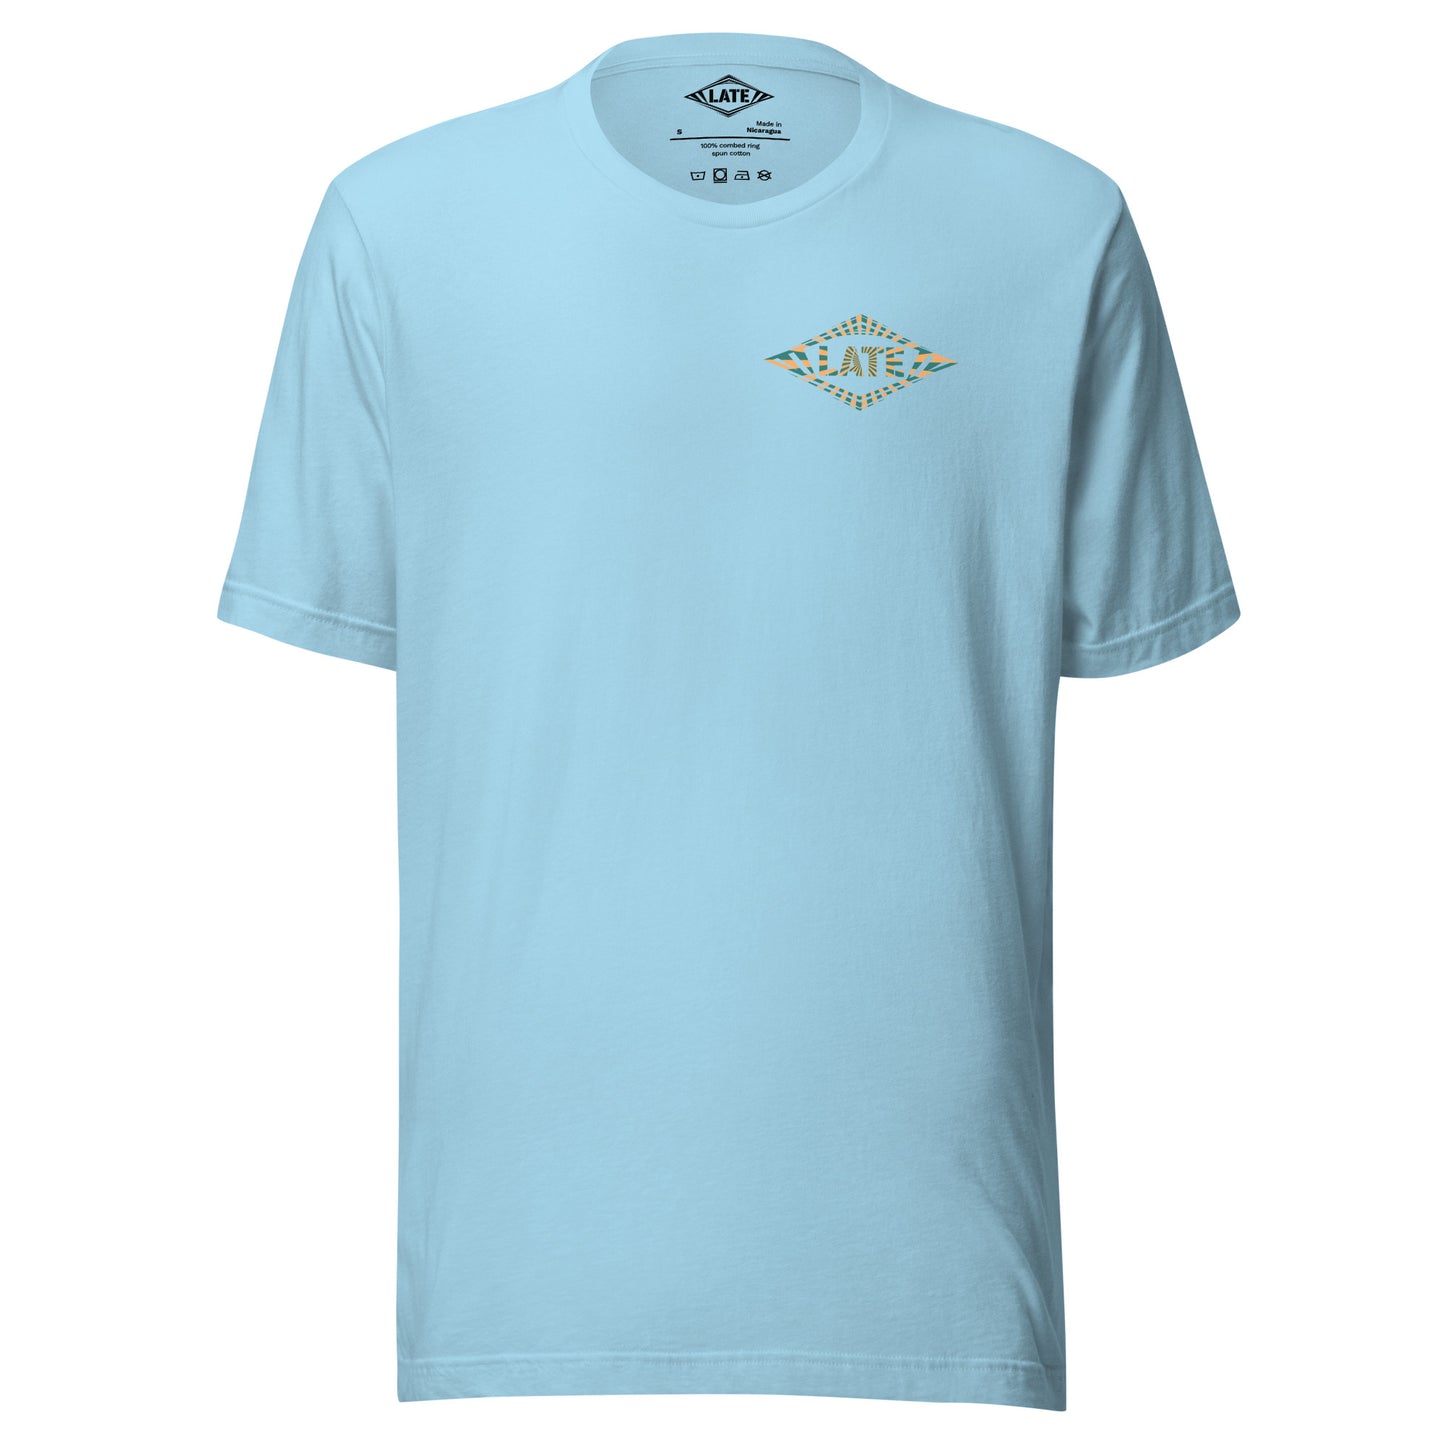 T-Shirt Walk Of Life logo Late surfing design old school hippie tshirt couleur océan bleu